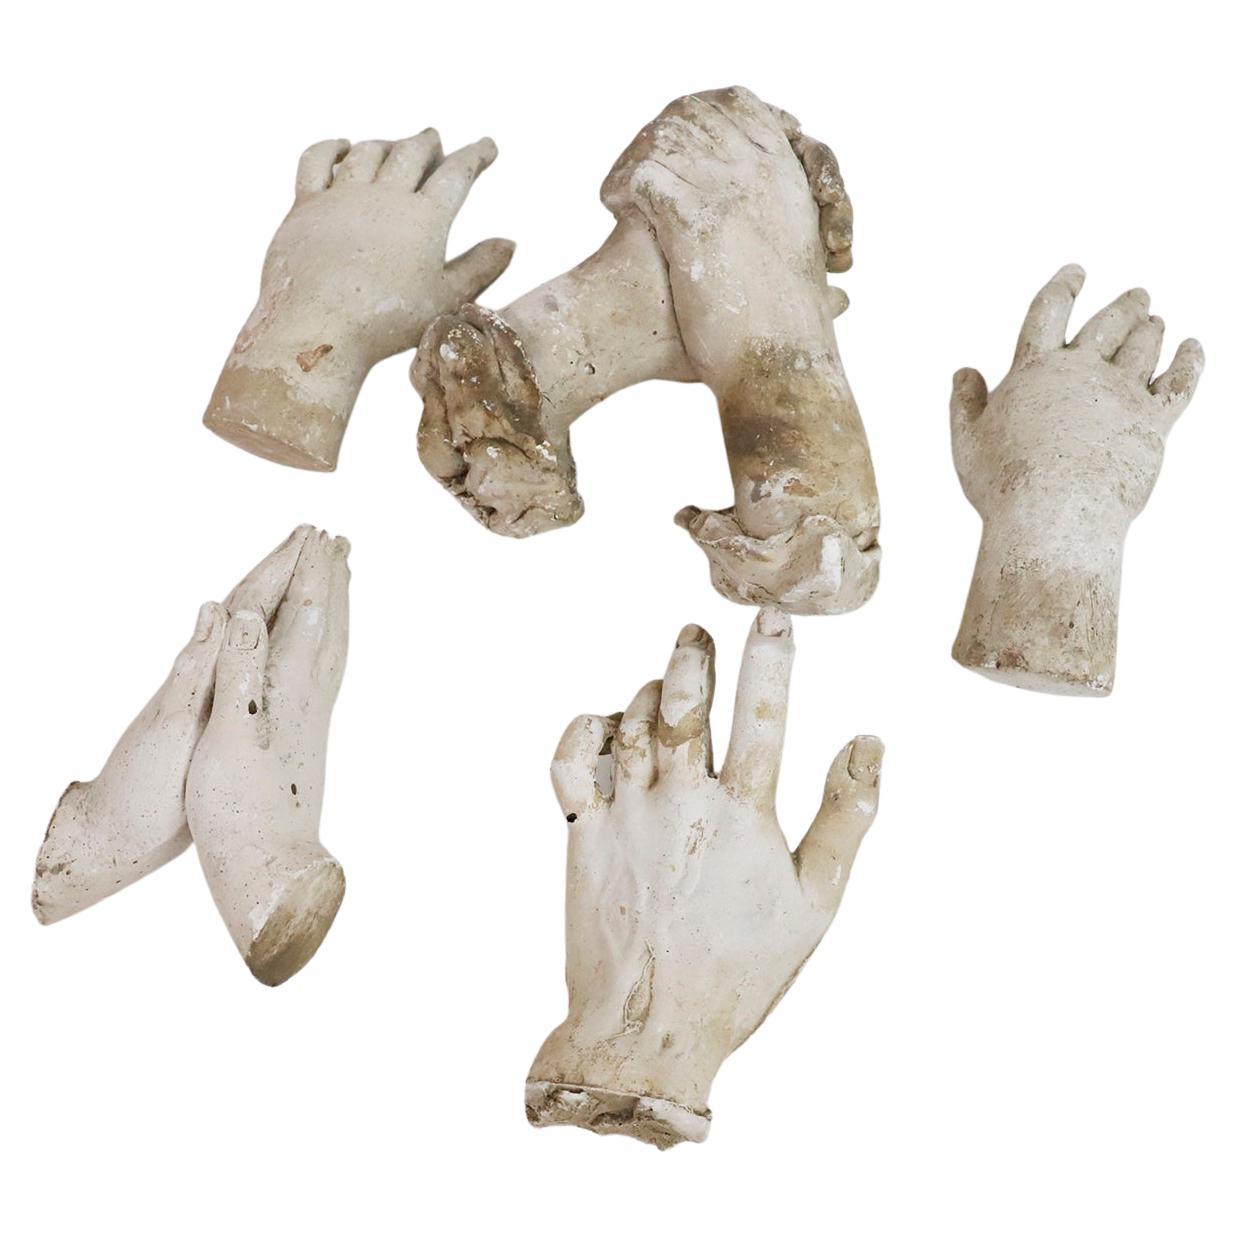 19th Century Set of Study Hands Saint Sculptures 'Set 2'